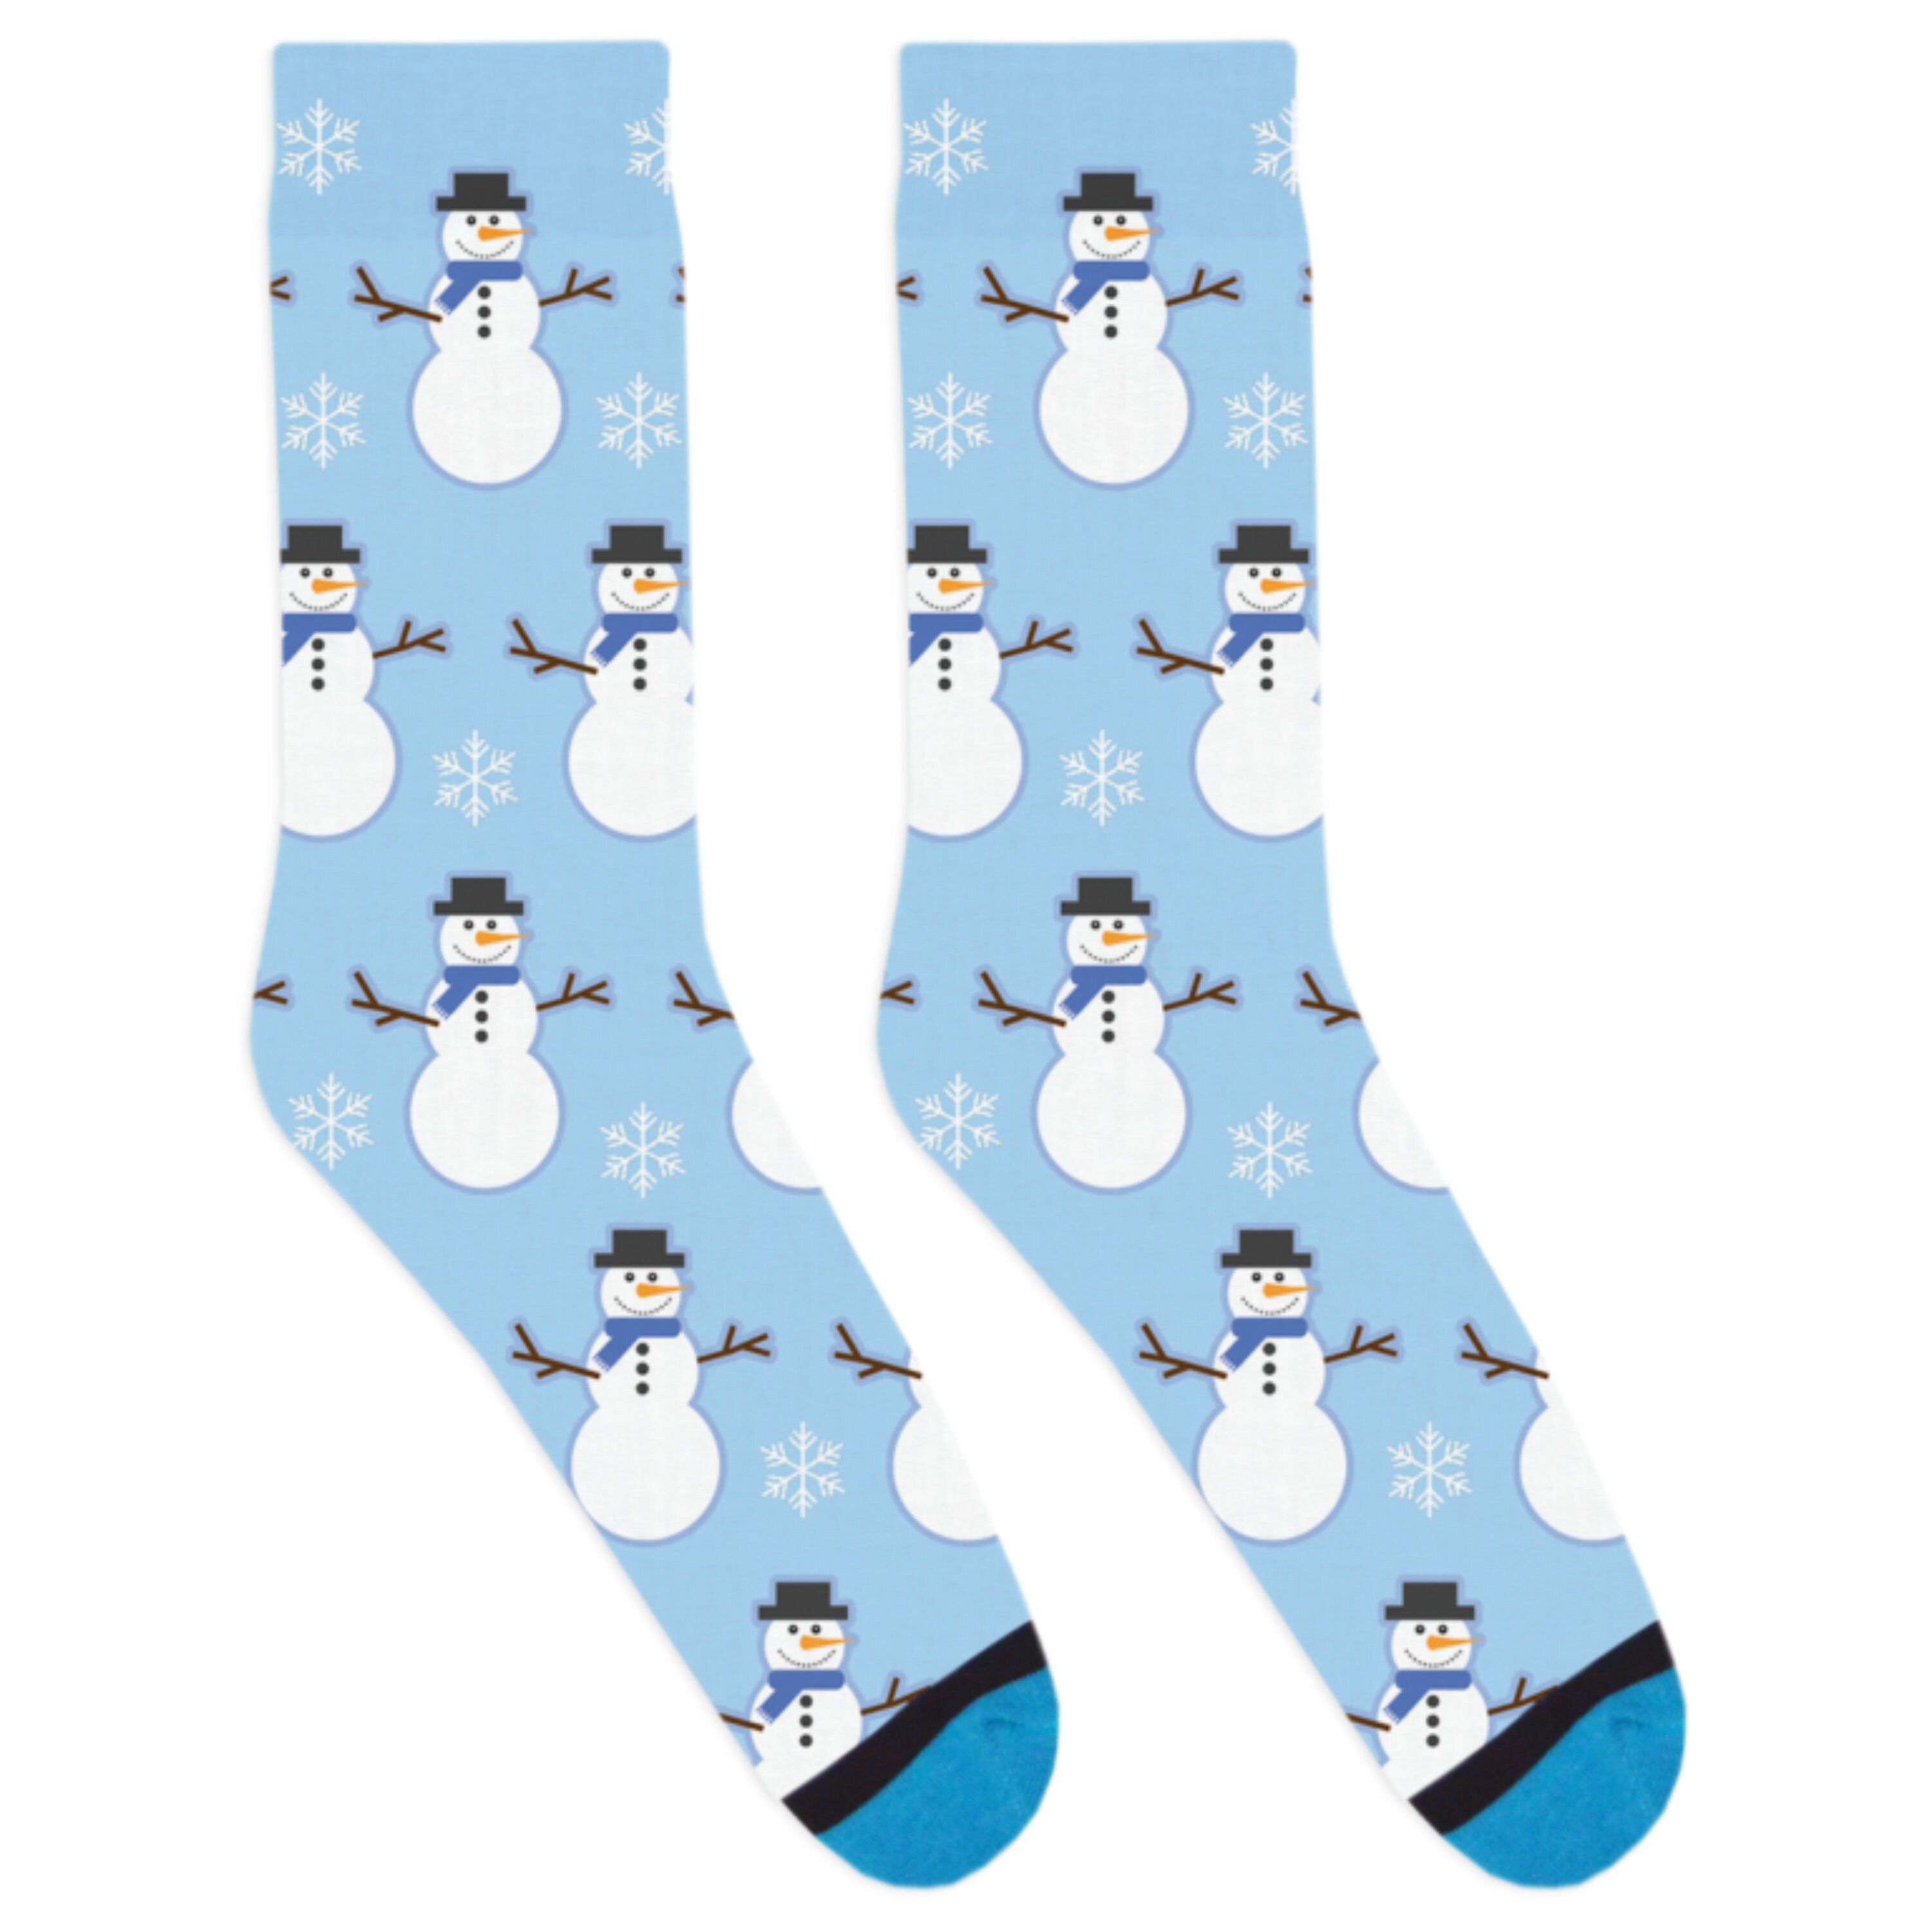 Discover DivvyUp Socks - Snowman Socks